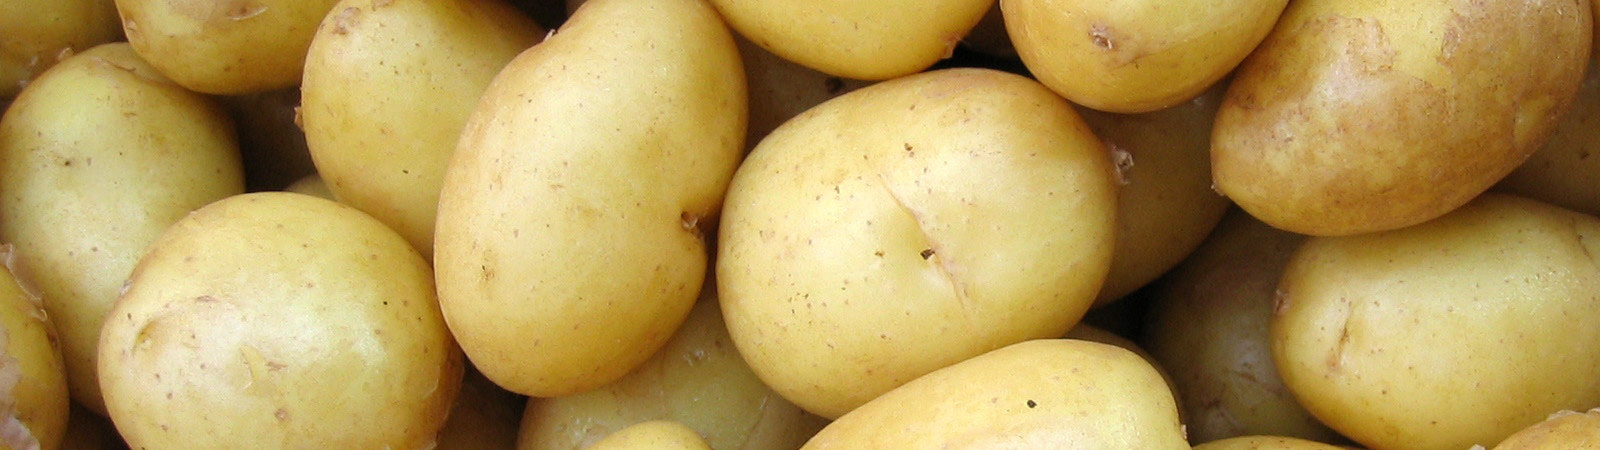 Patata fertilizantes orgánicos 